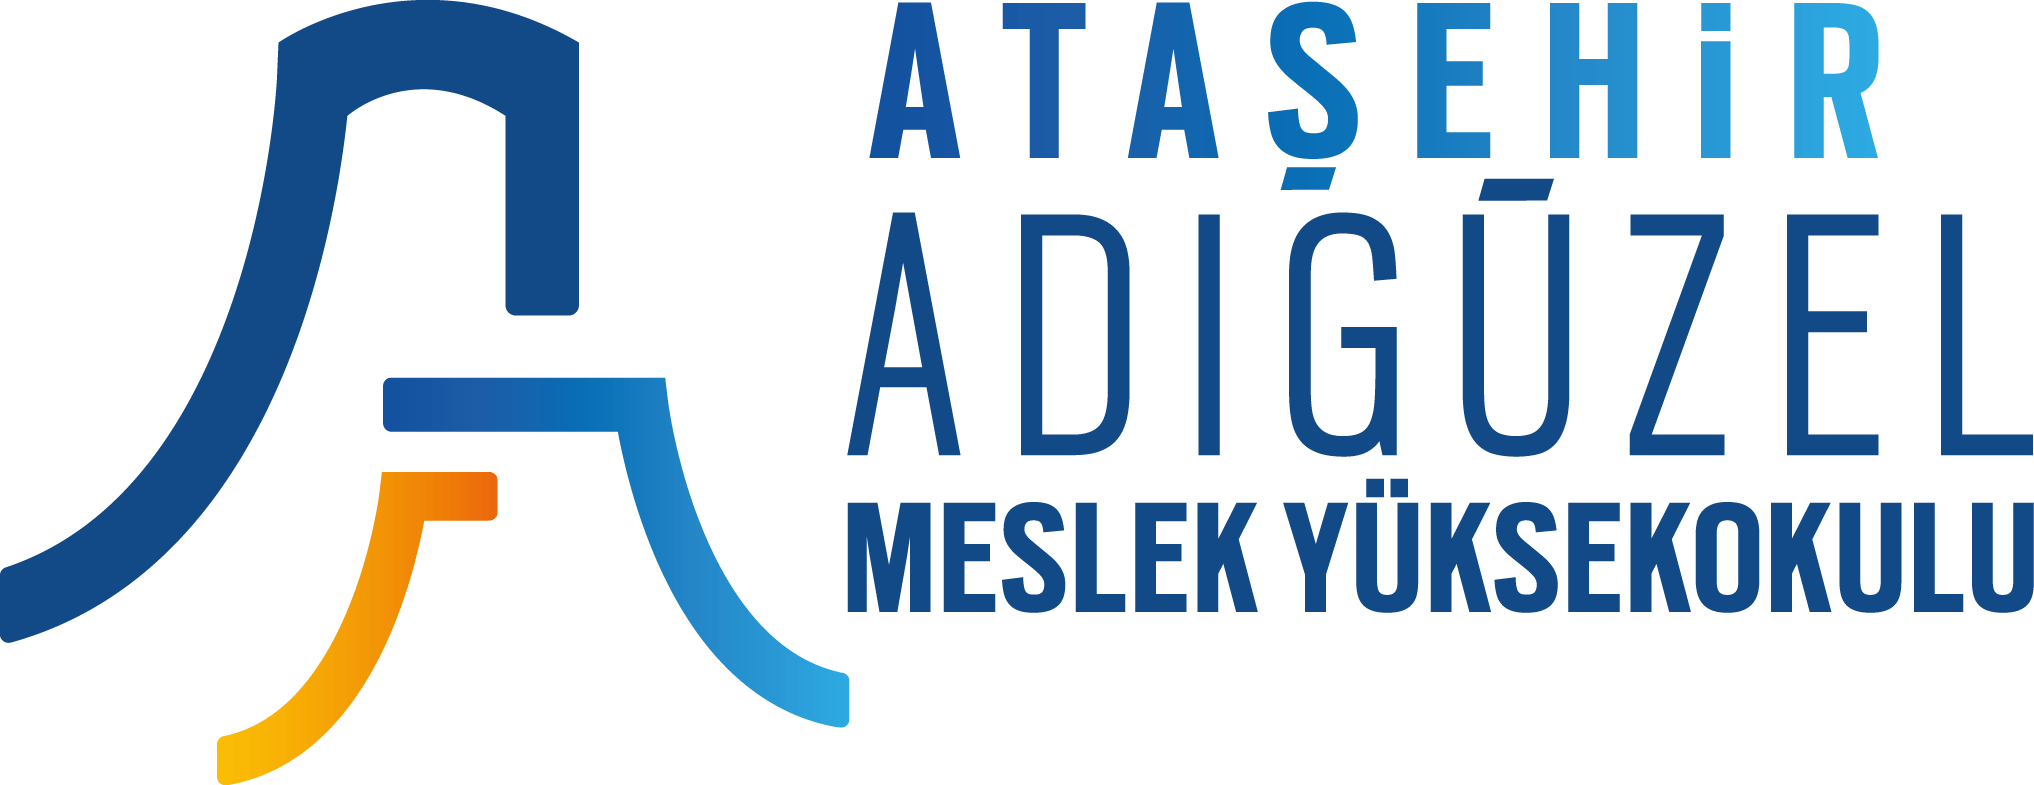 Ataşehir Adıgüzel Meslek Yüksekokulu Logo   Amblem png